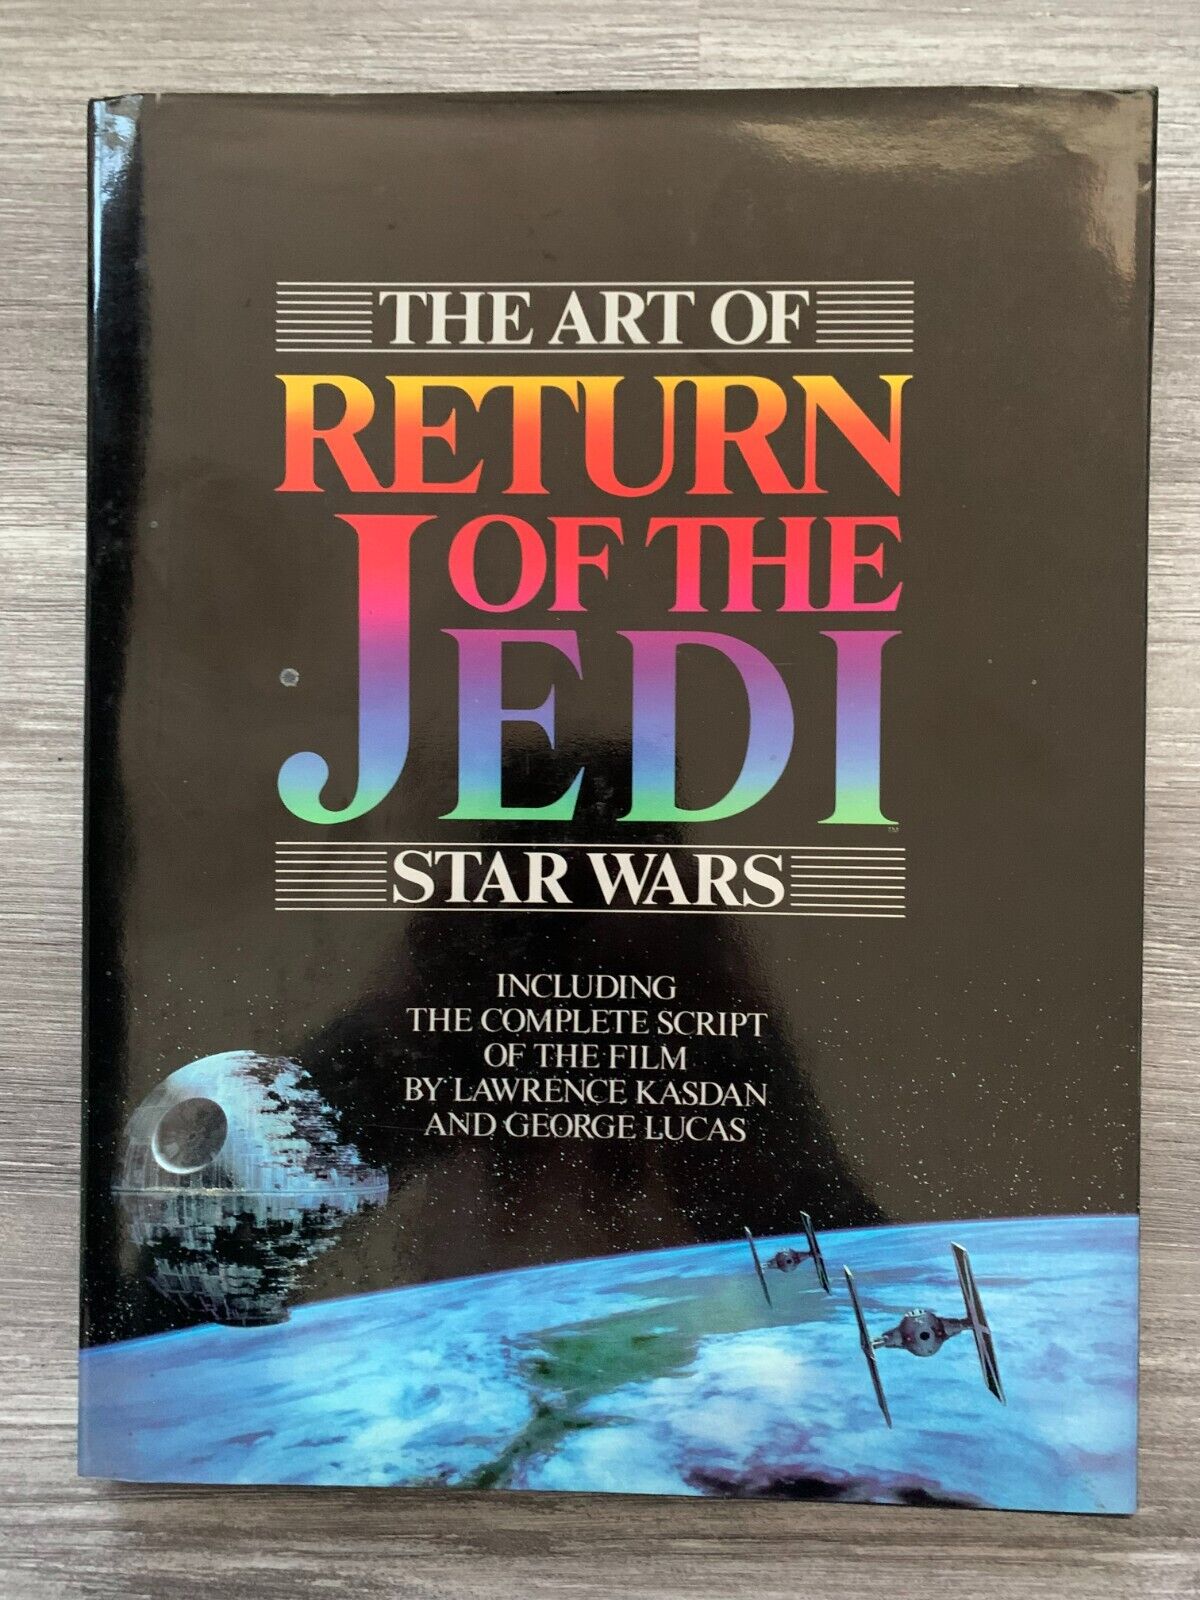 1983 STAR WARS Art of Return of the Jedi by Lawrence Kasdan HC/DJ 1st Ballantine